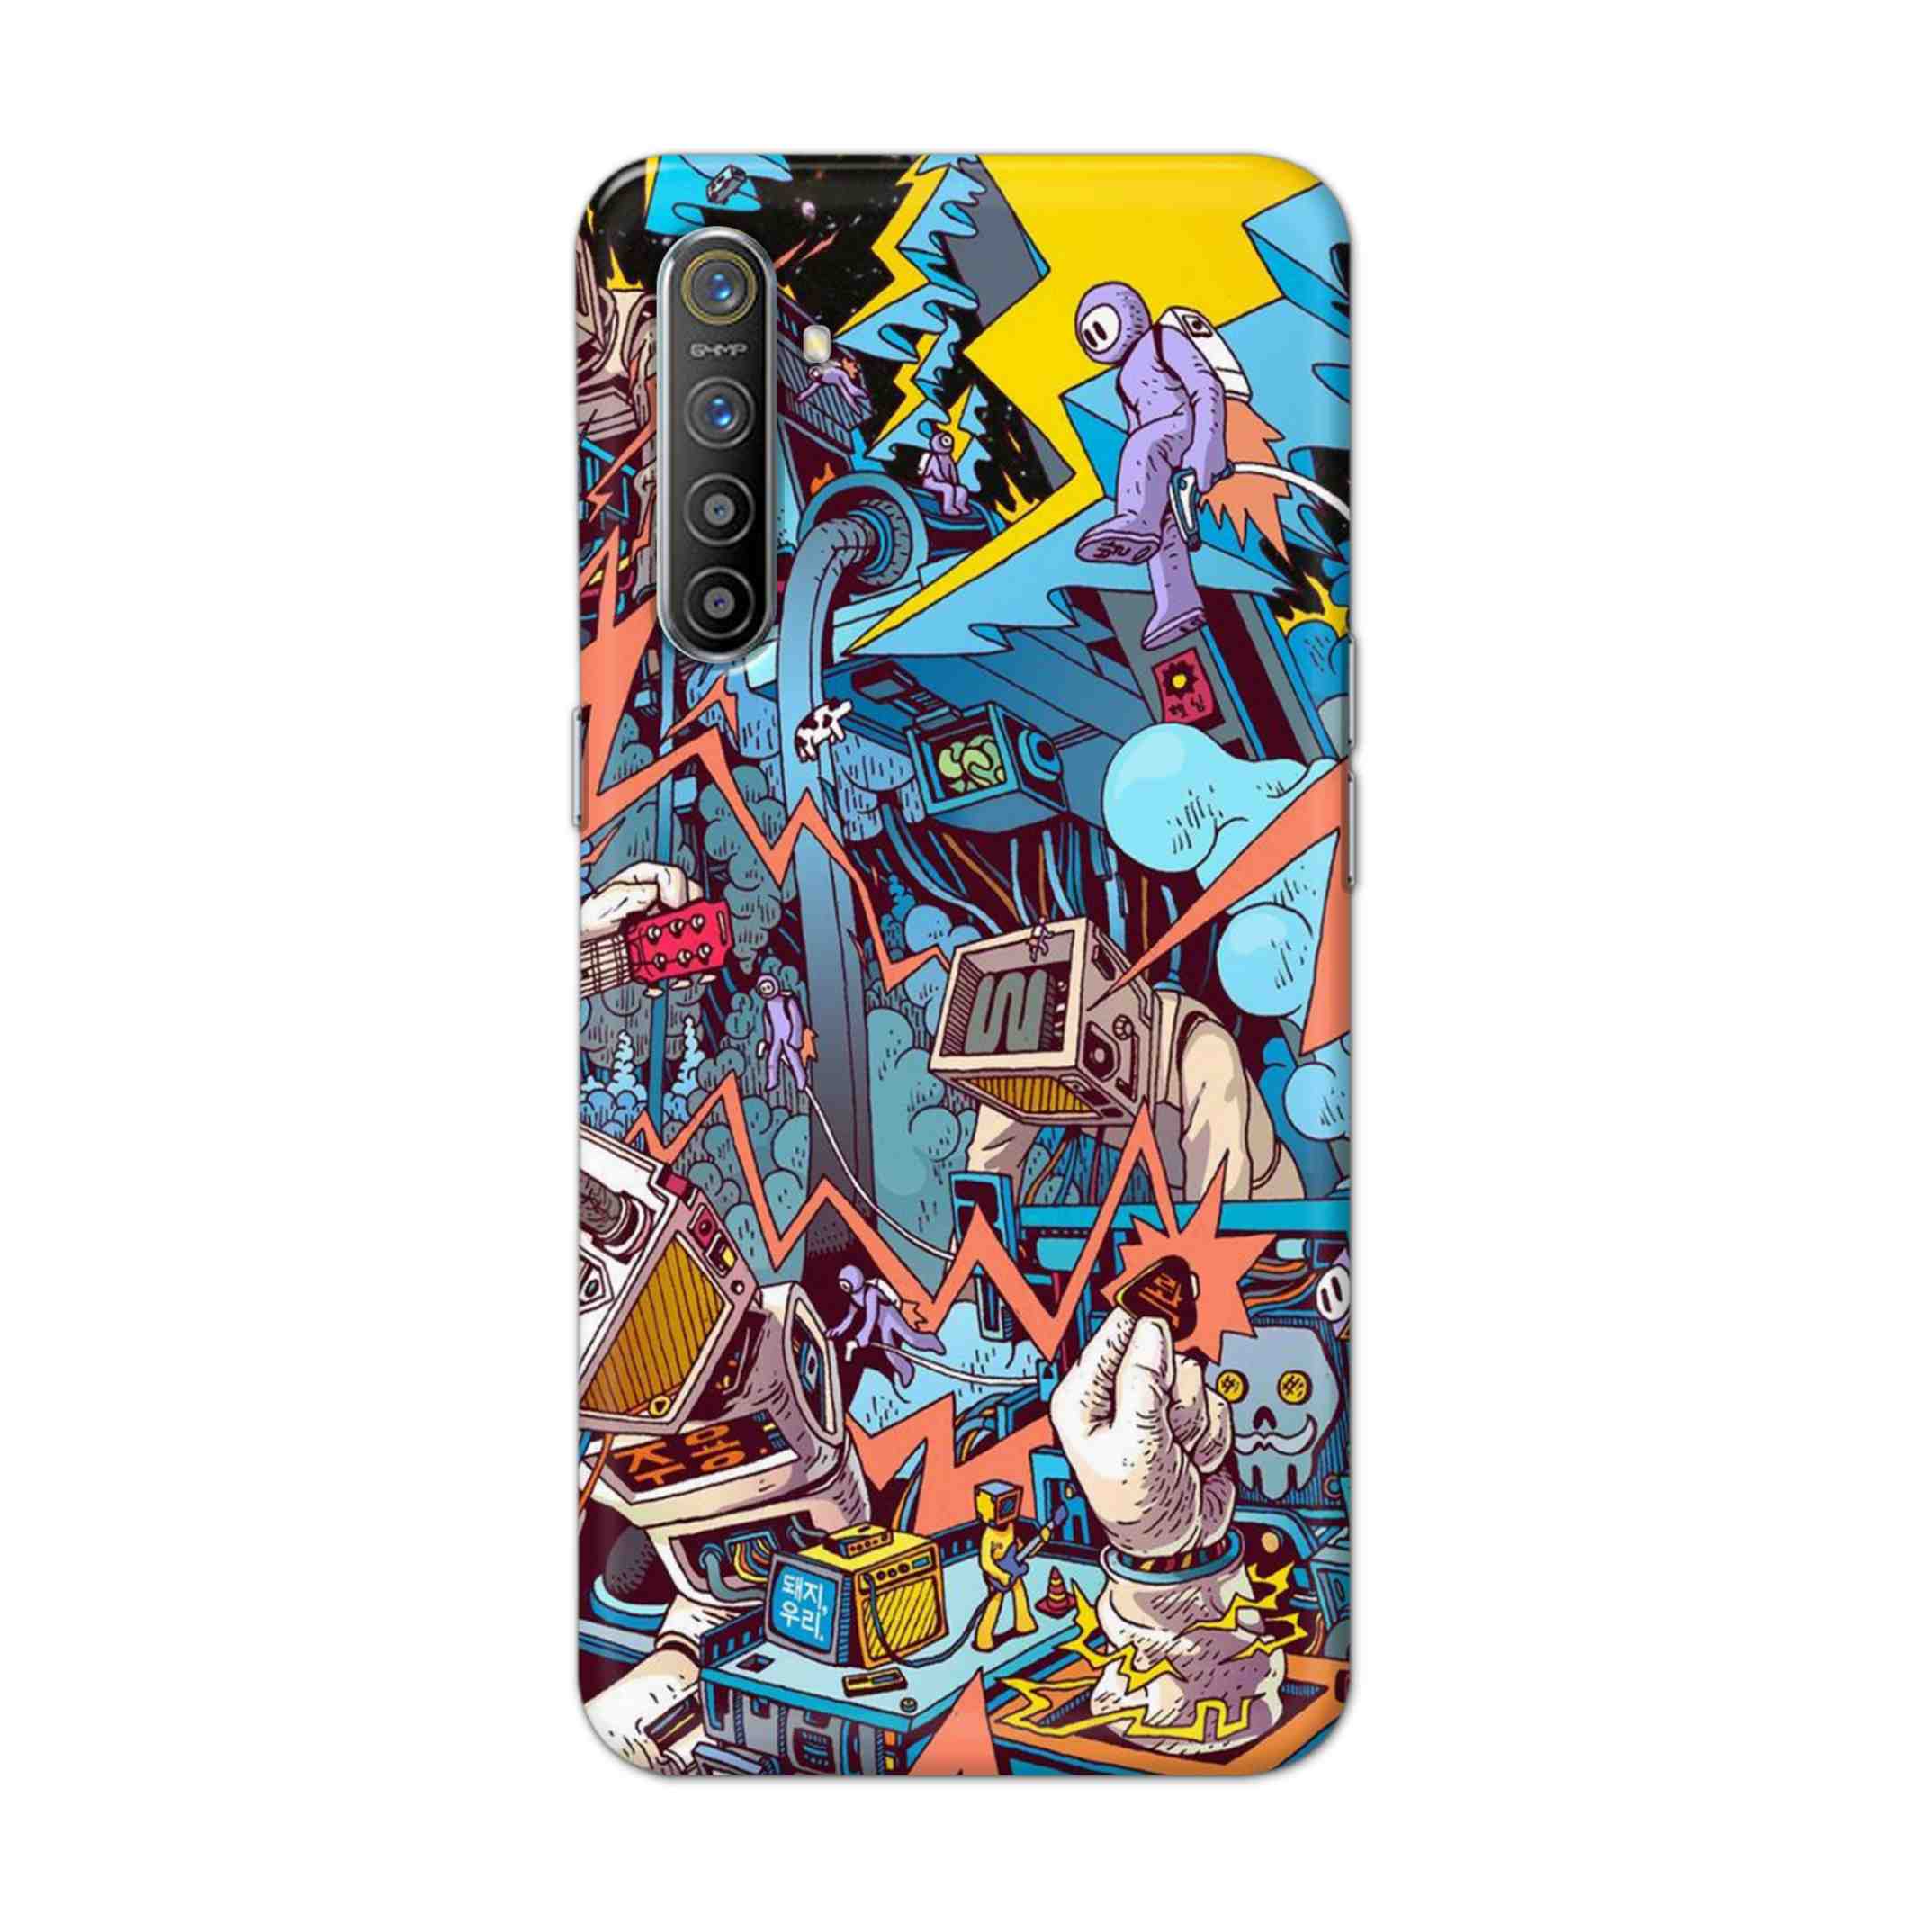 Buy Ofo Panic Hard Back Mobile Phone Case Cover For Oppo Realme XT Online